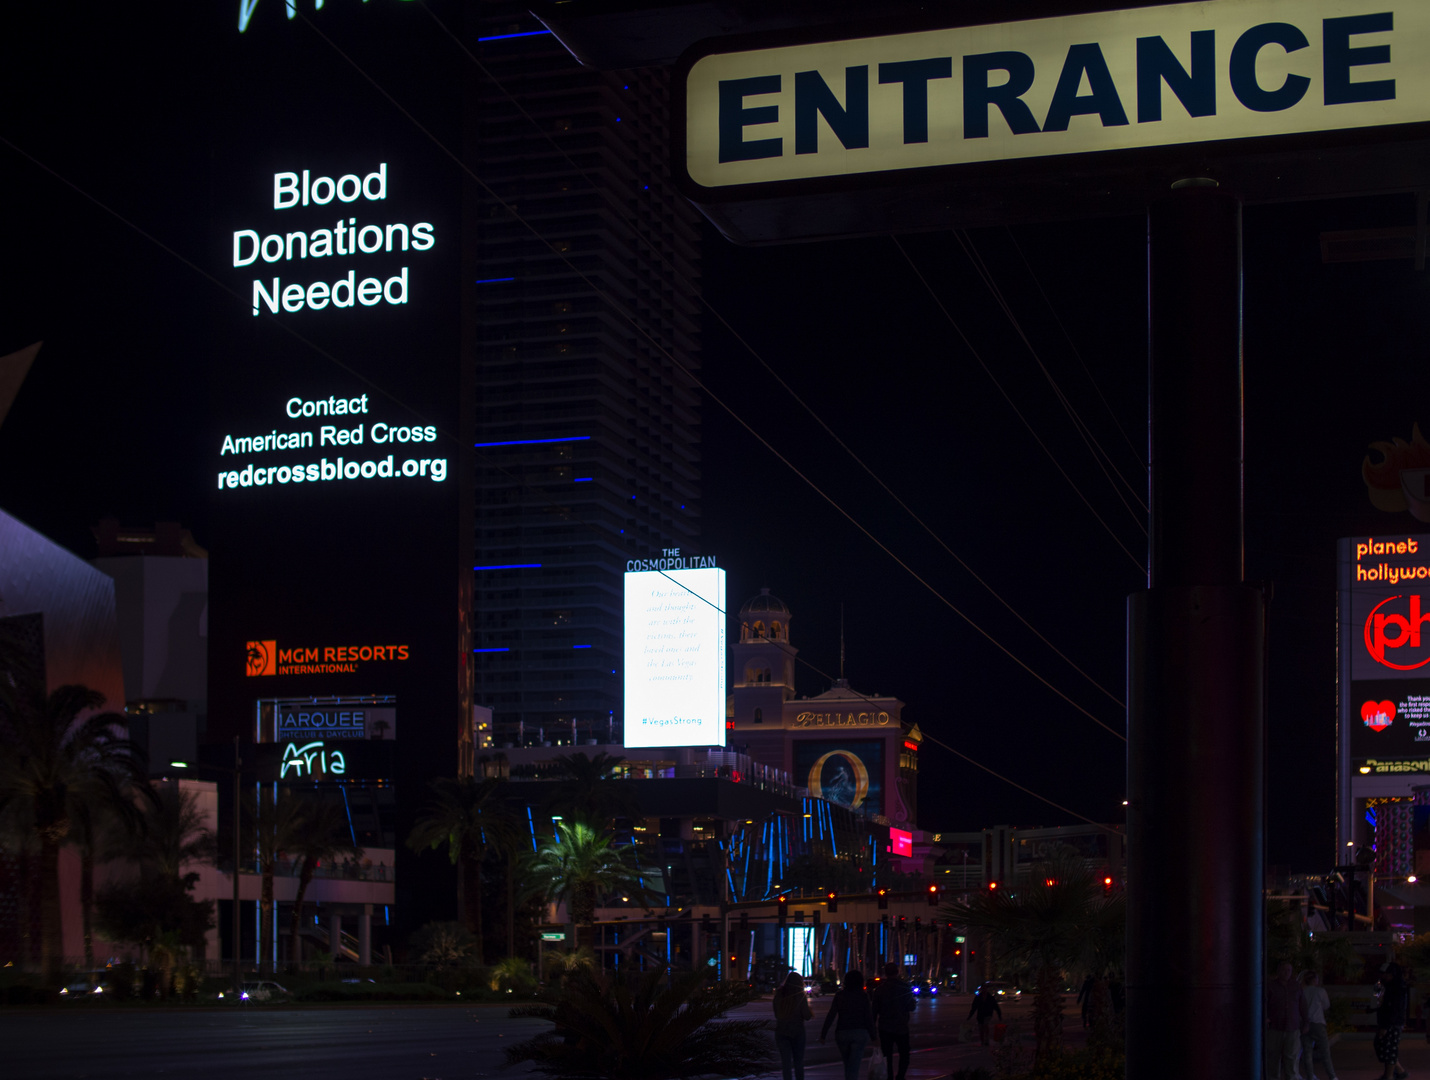 Las Vegas, "Blood Donations Needed"